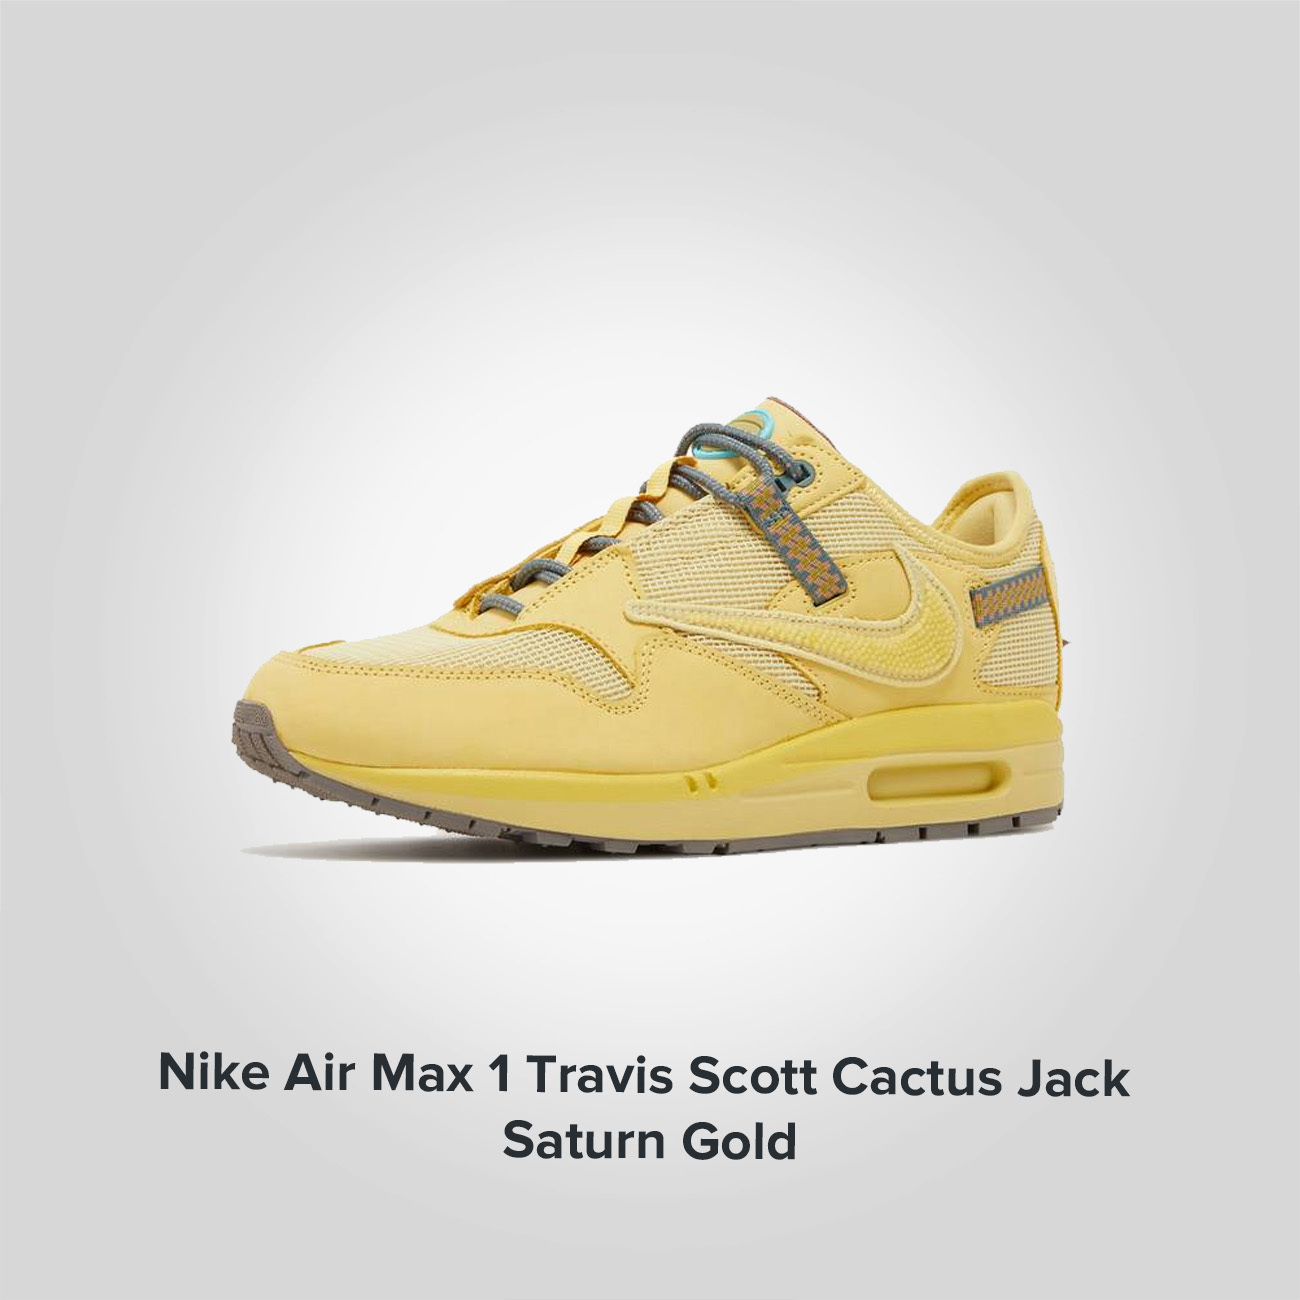 Nike Air Max 1 Travis Scott Cactus Jack Saturn Gold